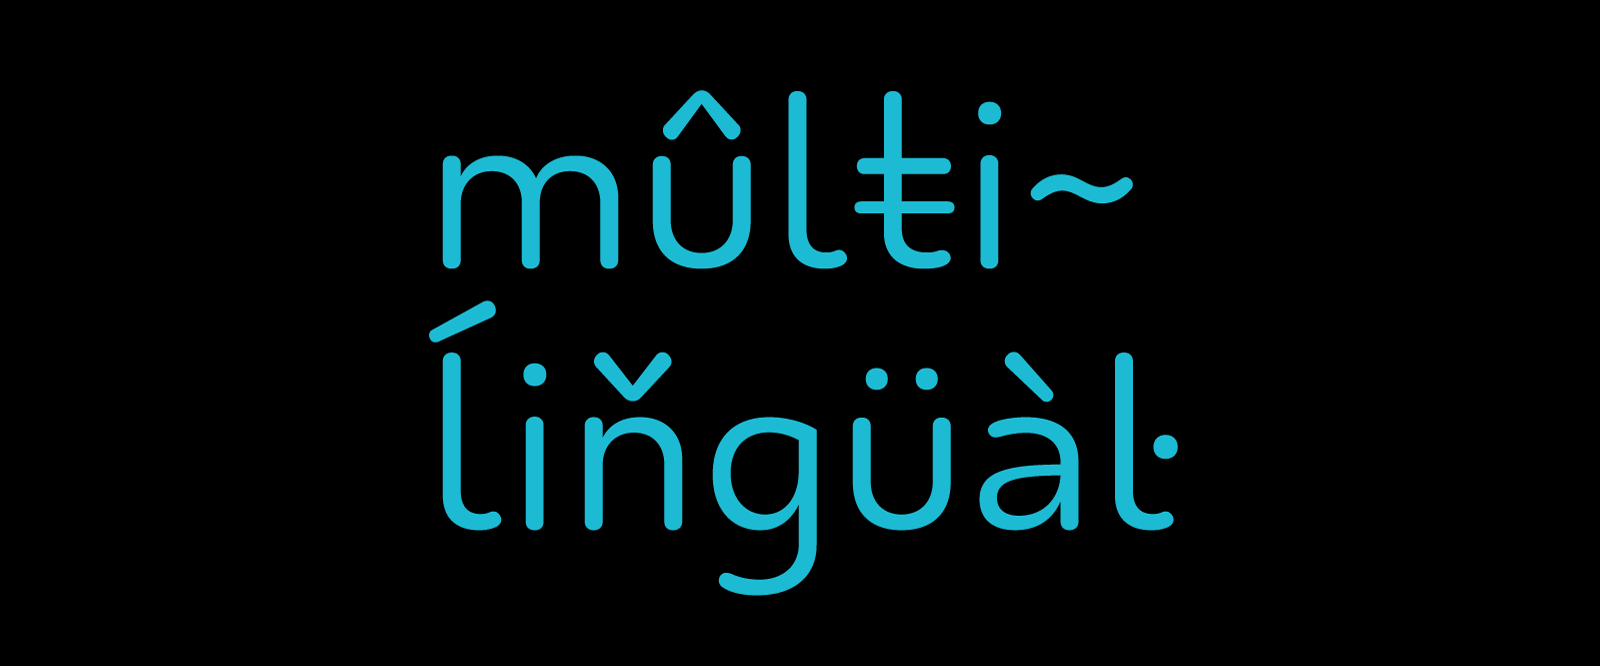 multilingual